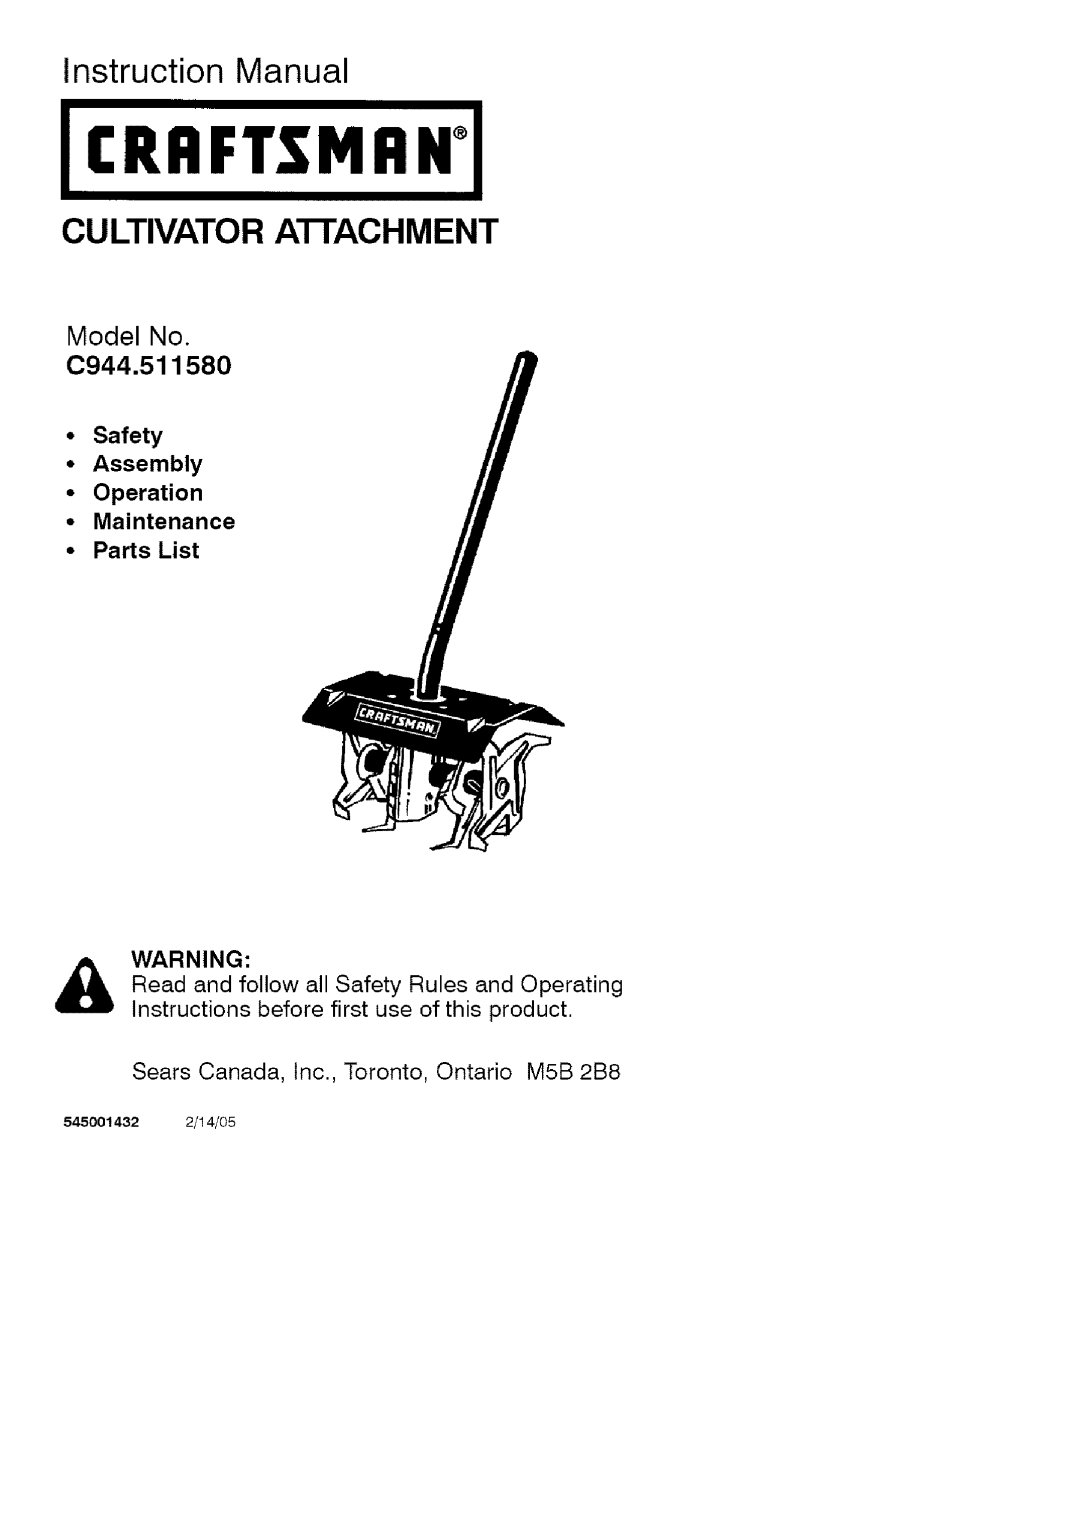 Craftsman instruction manual J€ Raftsma#J, Cultivator Ai-Fachment, Model No, C944.511580, Parts List, 5450014322/14/05 